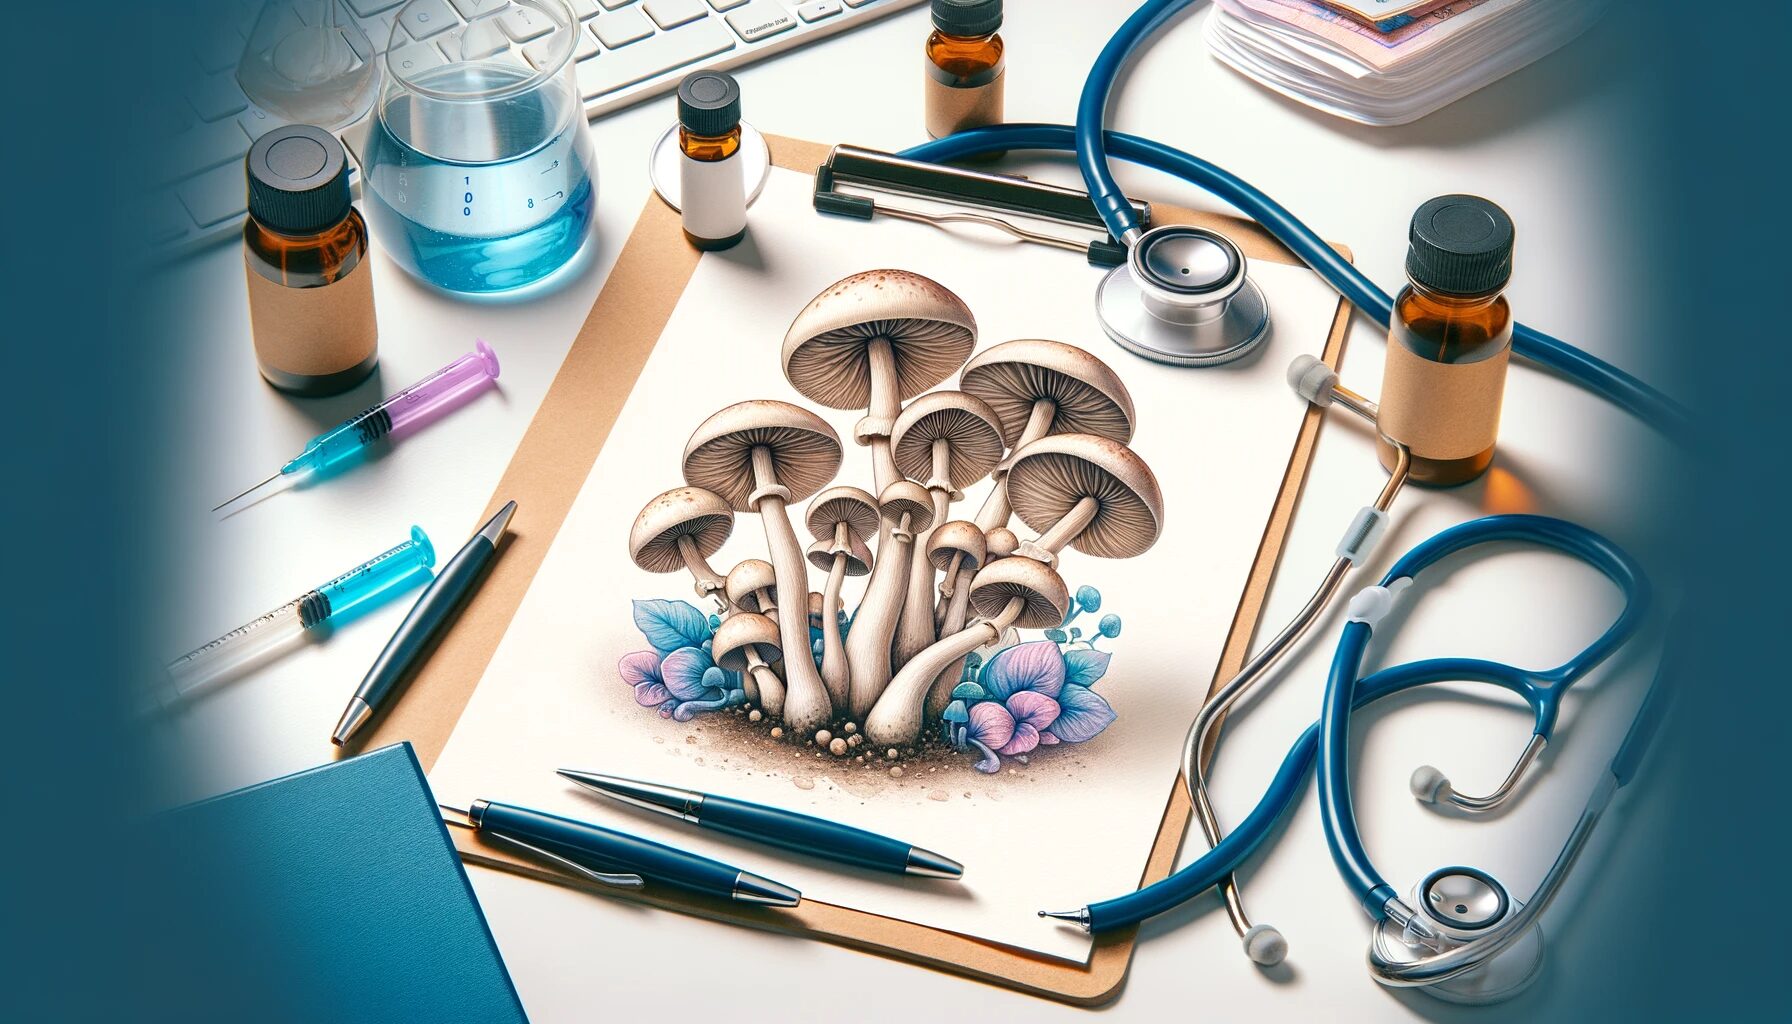 Benefits of Magic Mushrooms